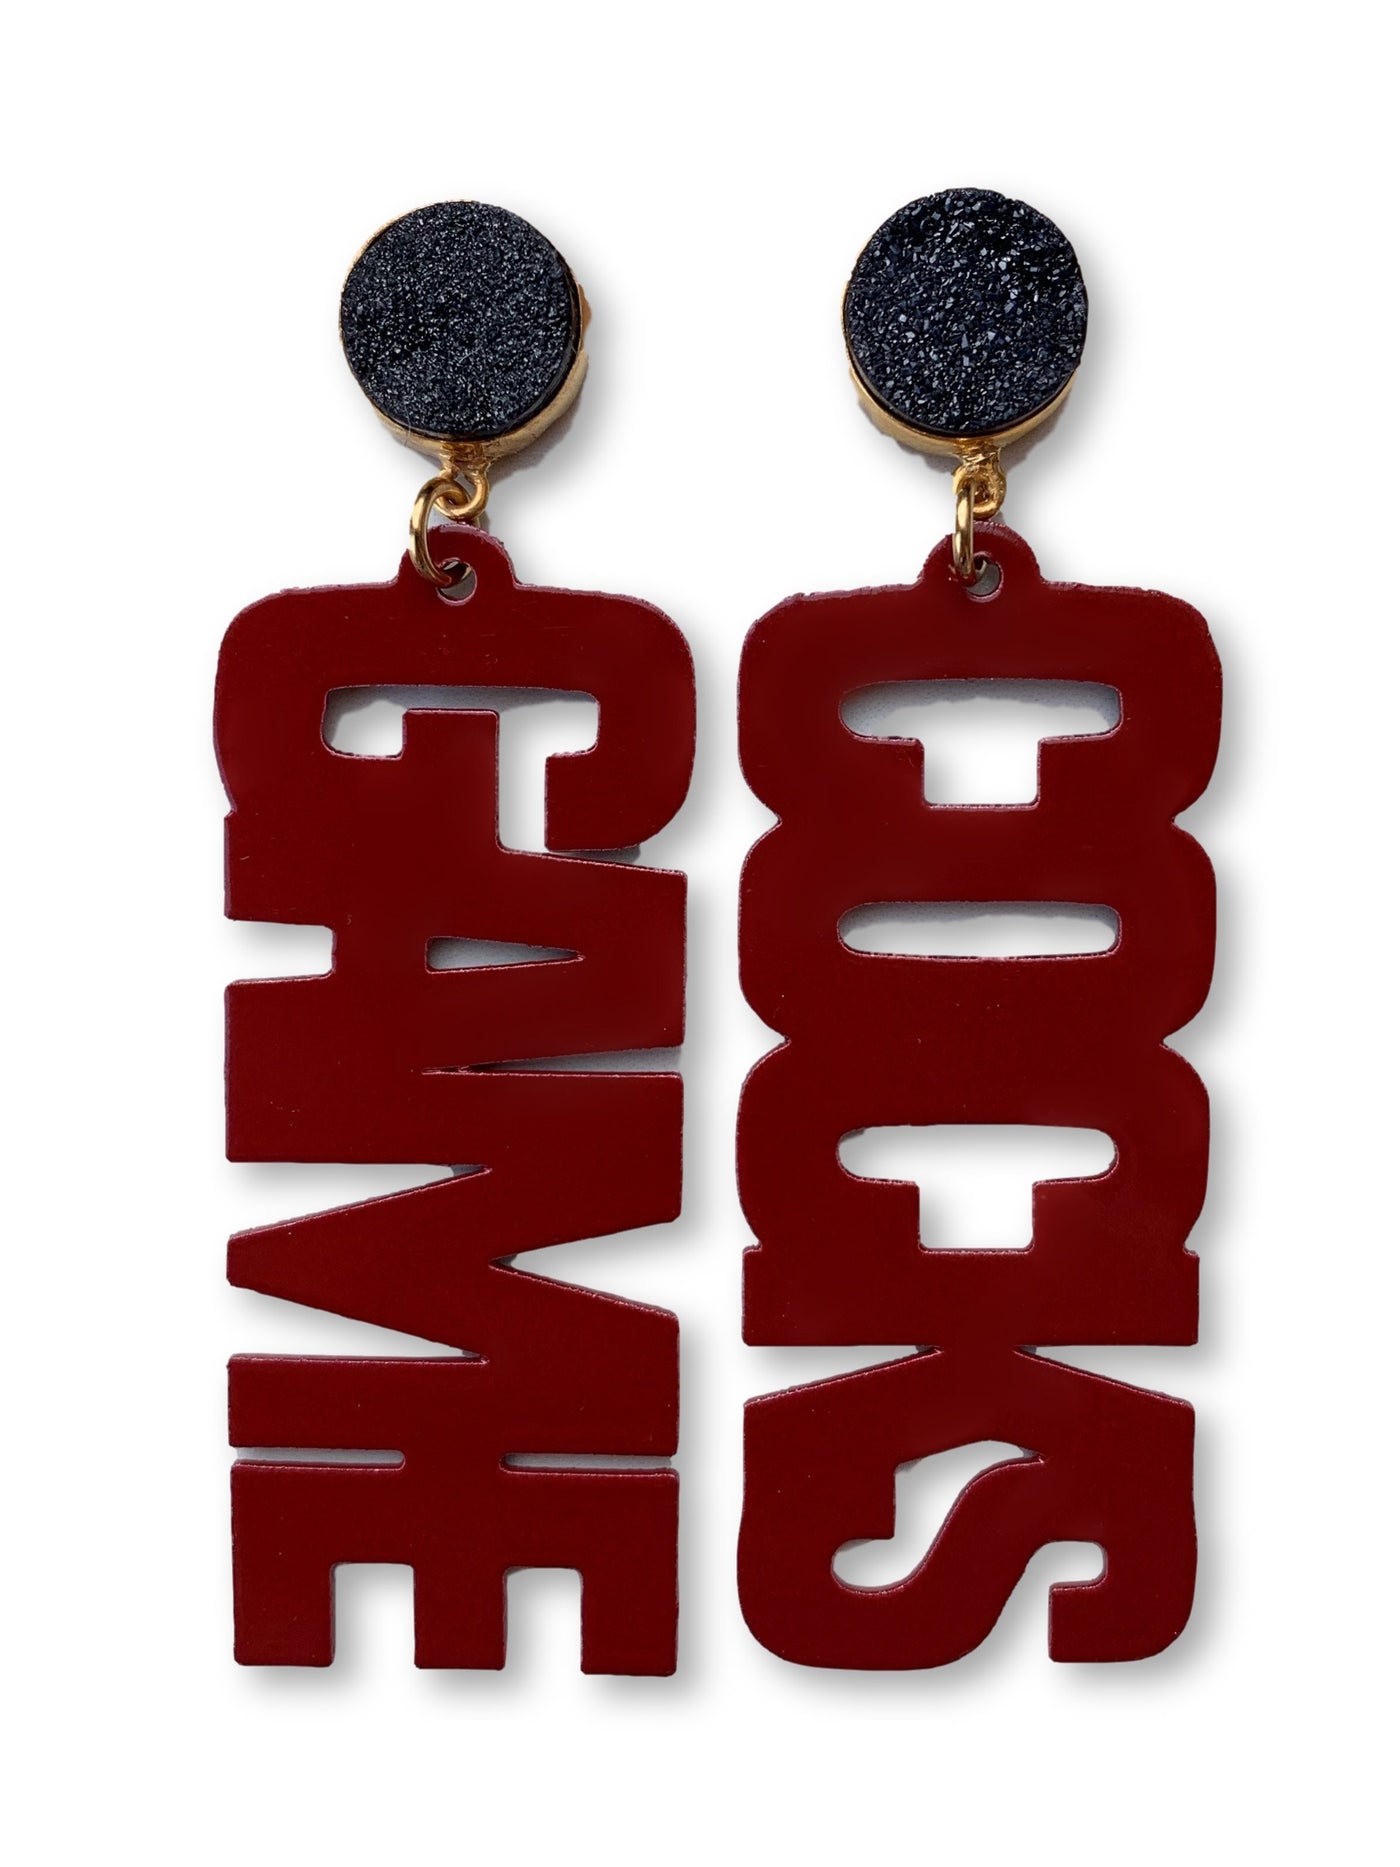 South Carolina Garnet "GAME COCKS" Earrings with Black Druzy